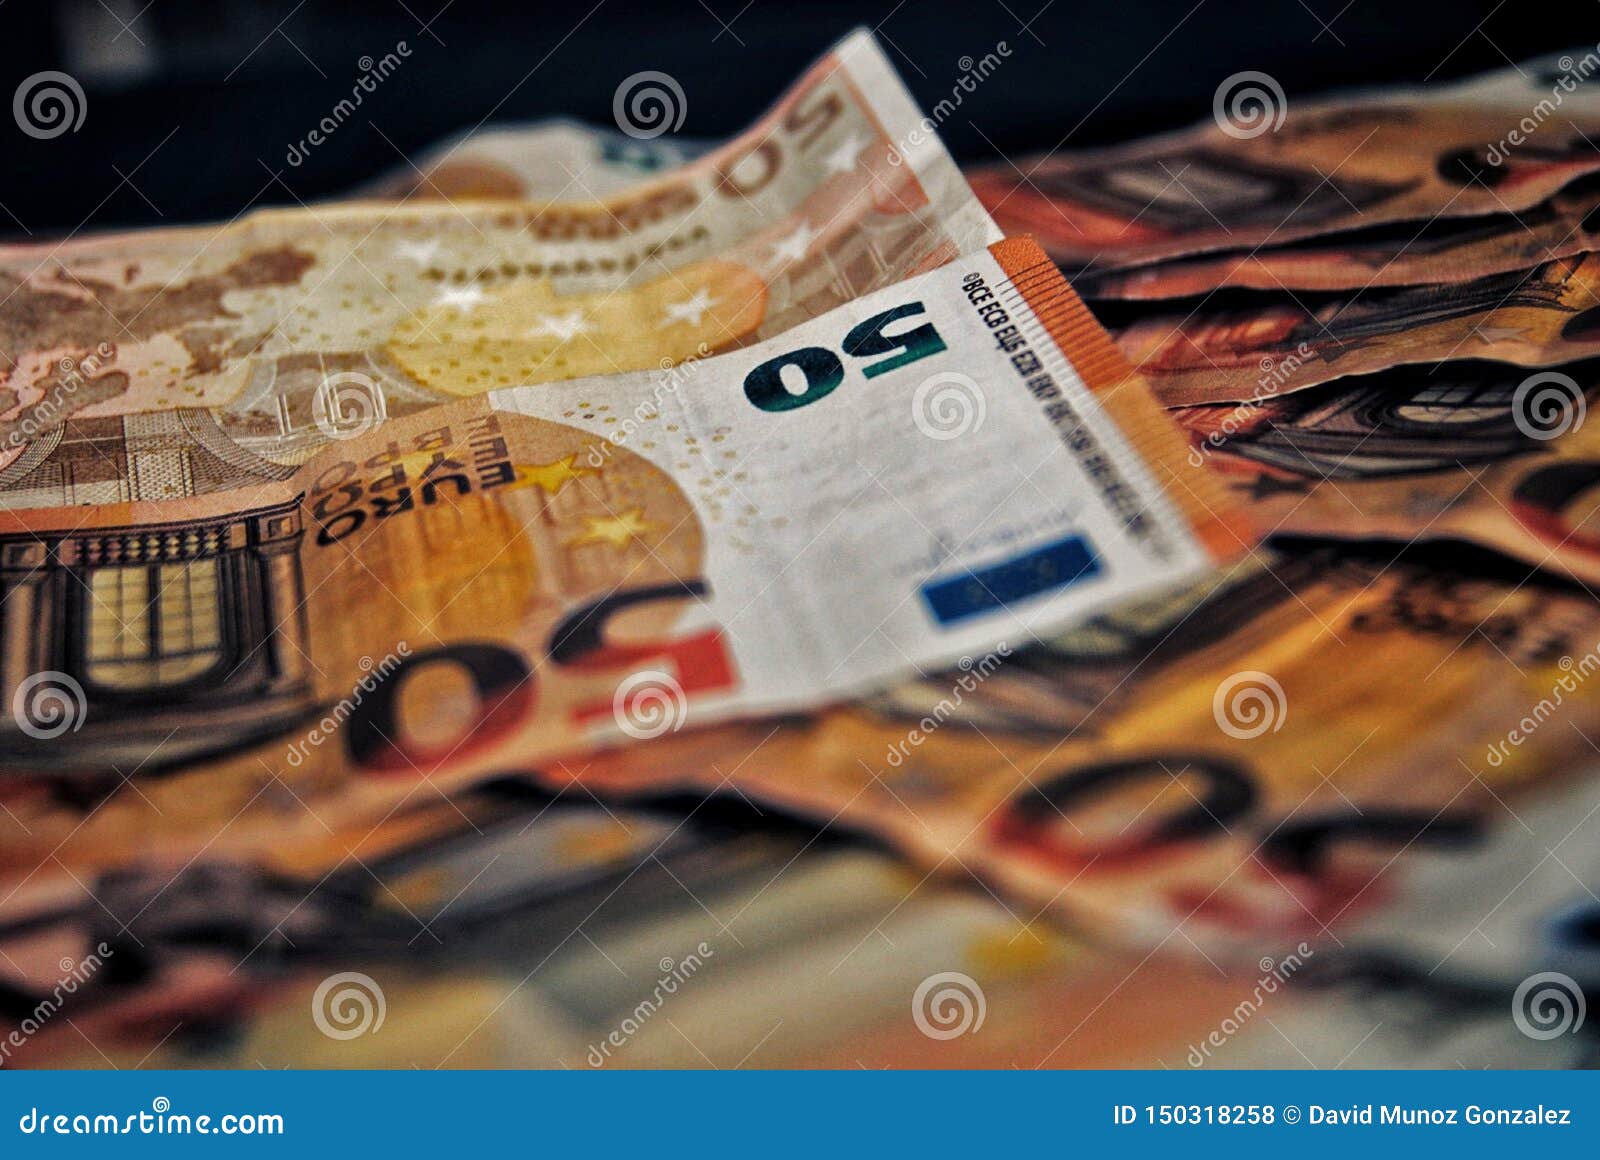 banknotes of 50 euros.